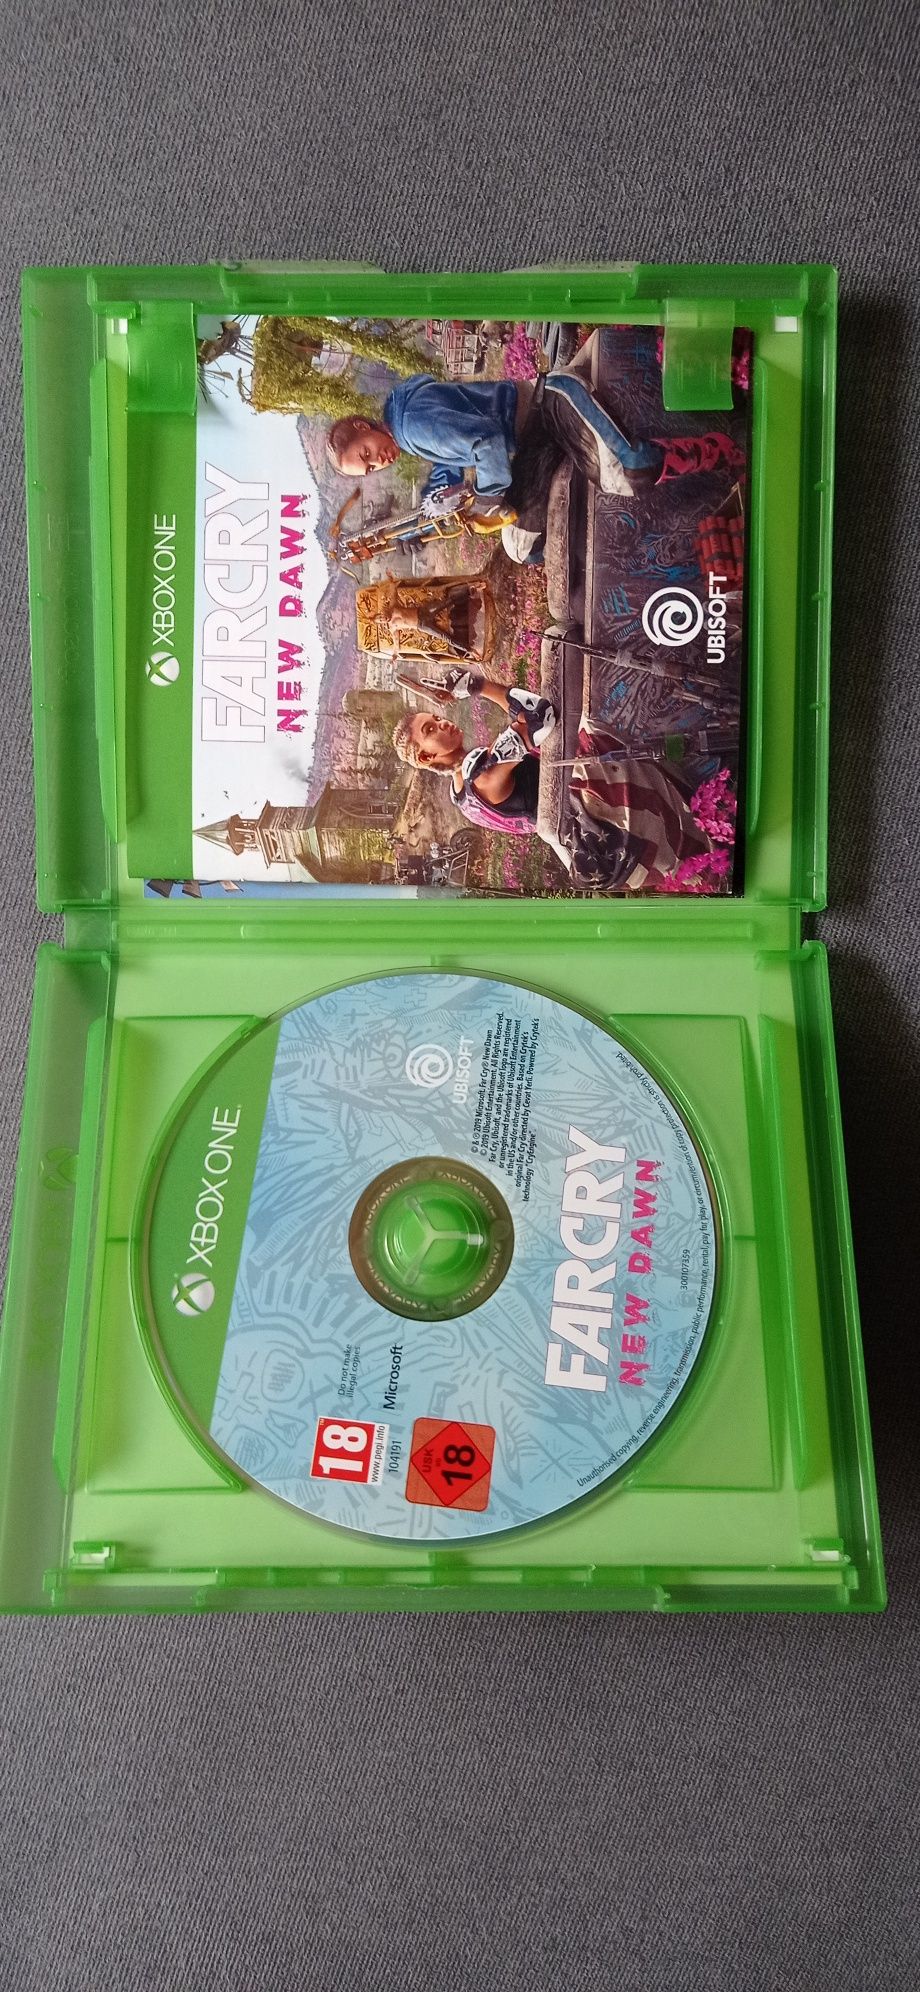 FarCry NewDawn XboxOne